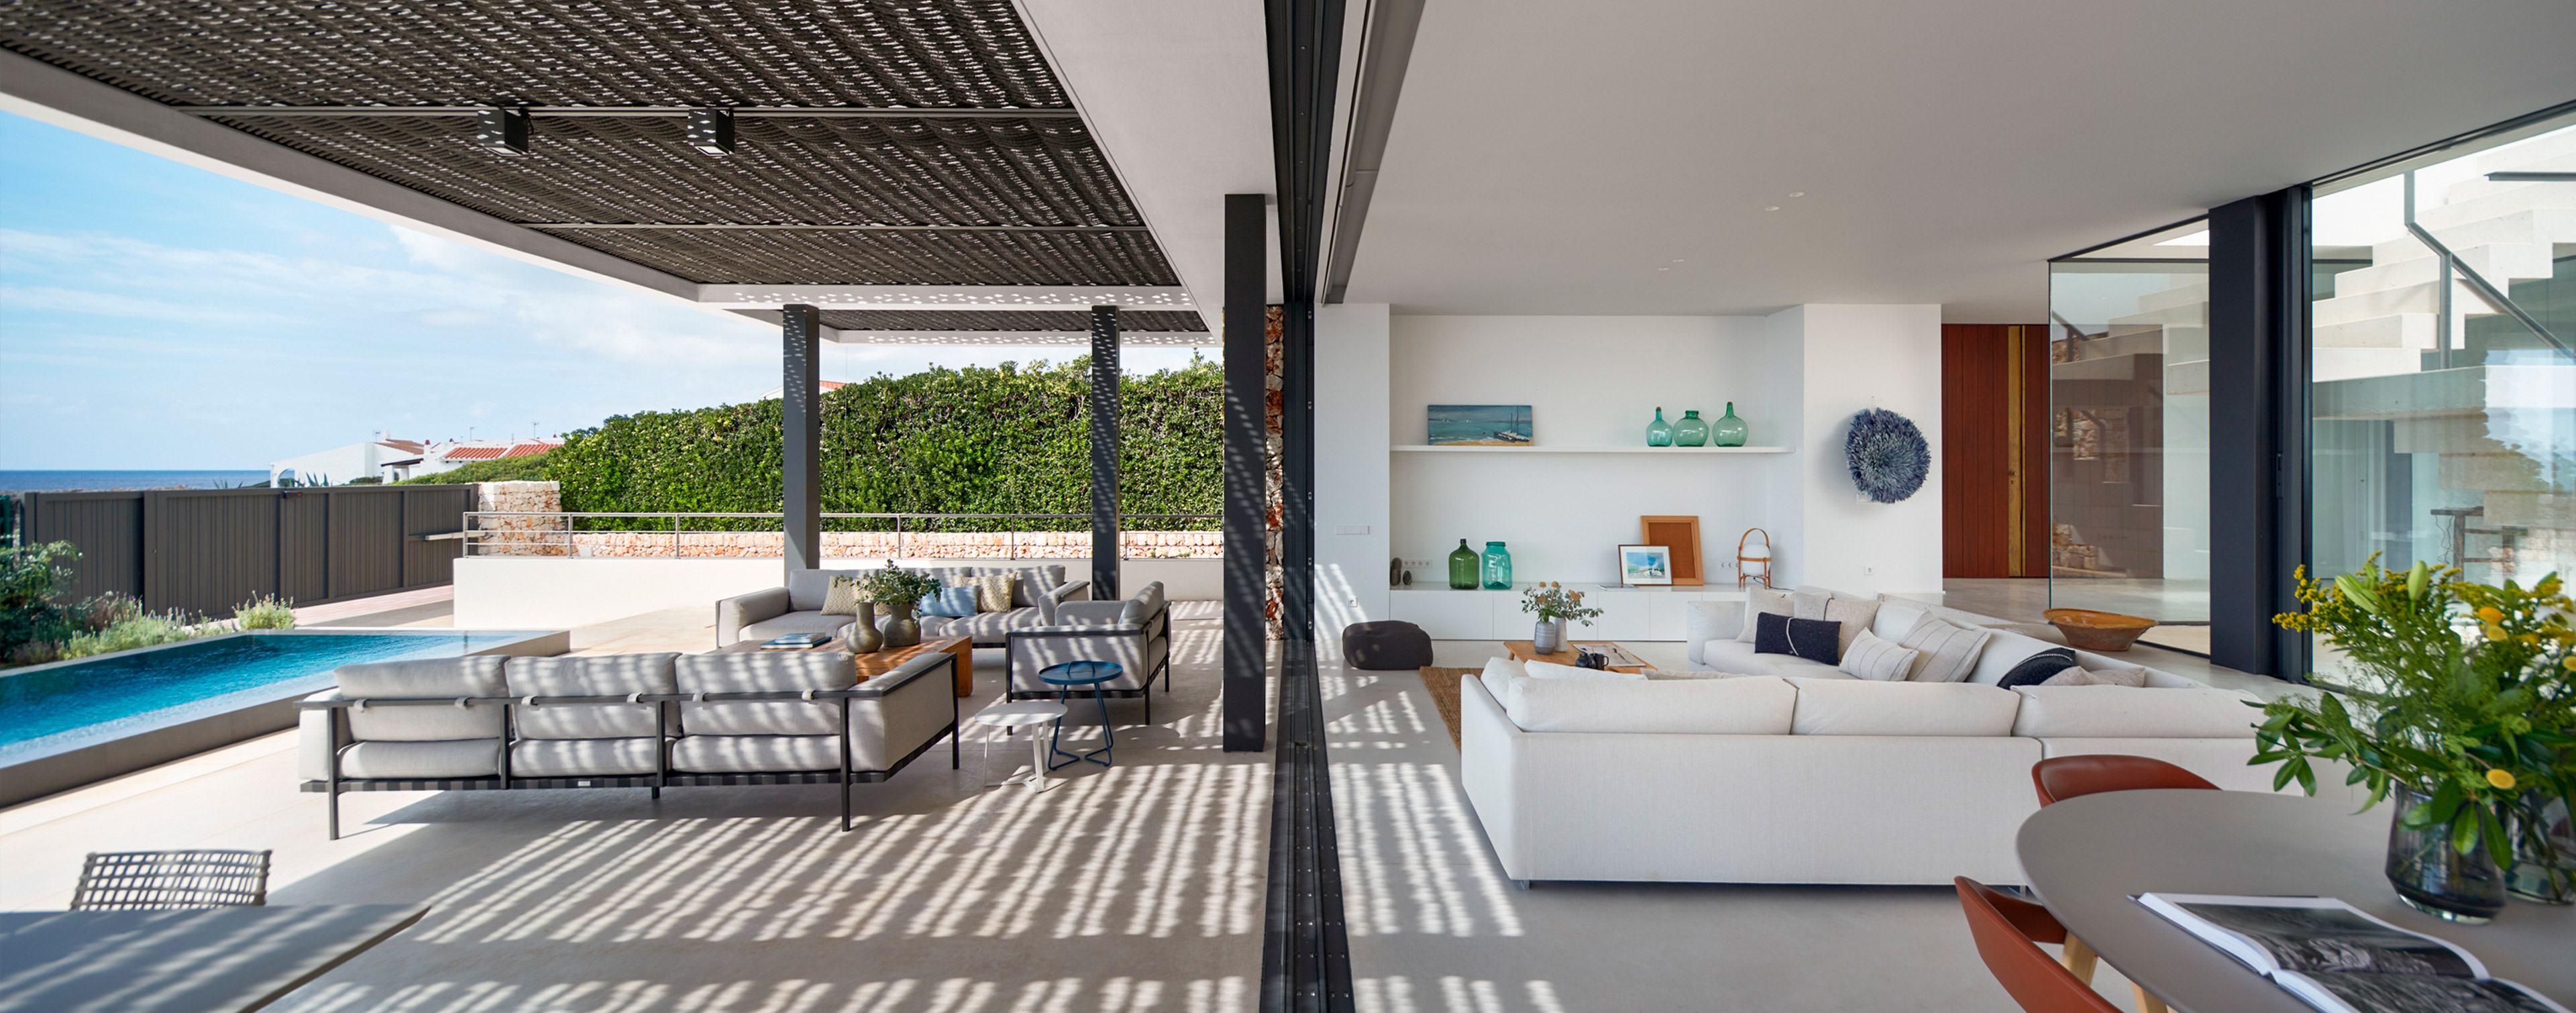 luv studio luxury architects menorca binibequer house IMG 02 - LUV Studio - Arquitectura y diseño - Barcelona